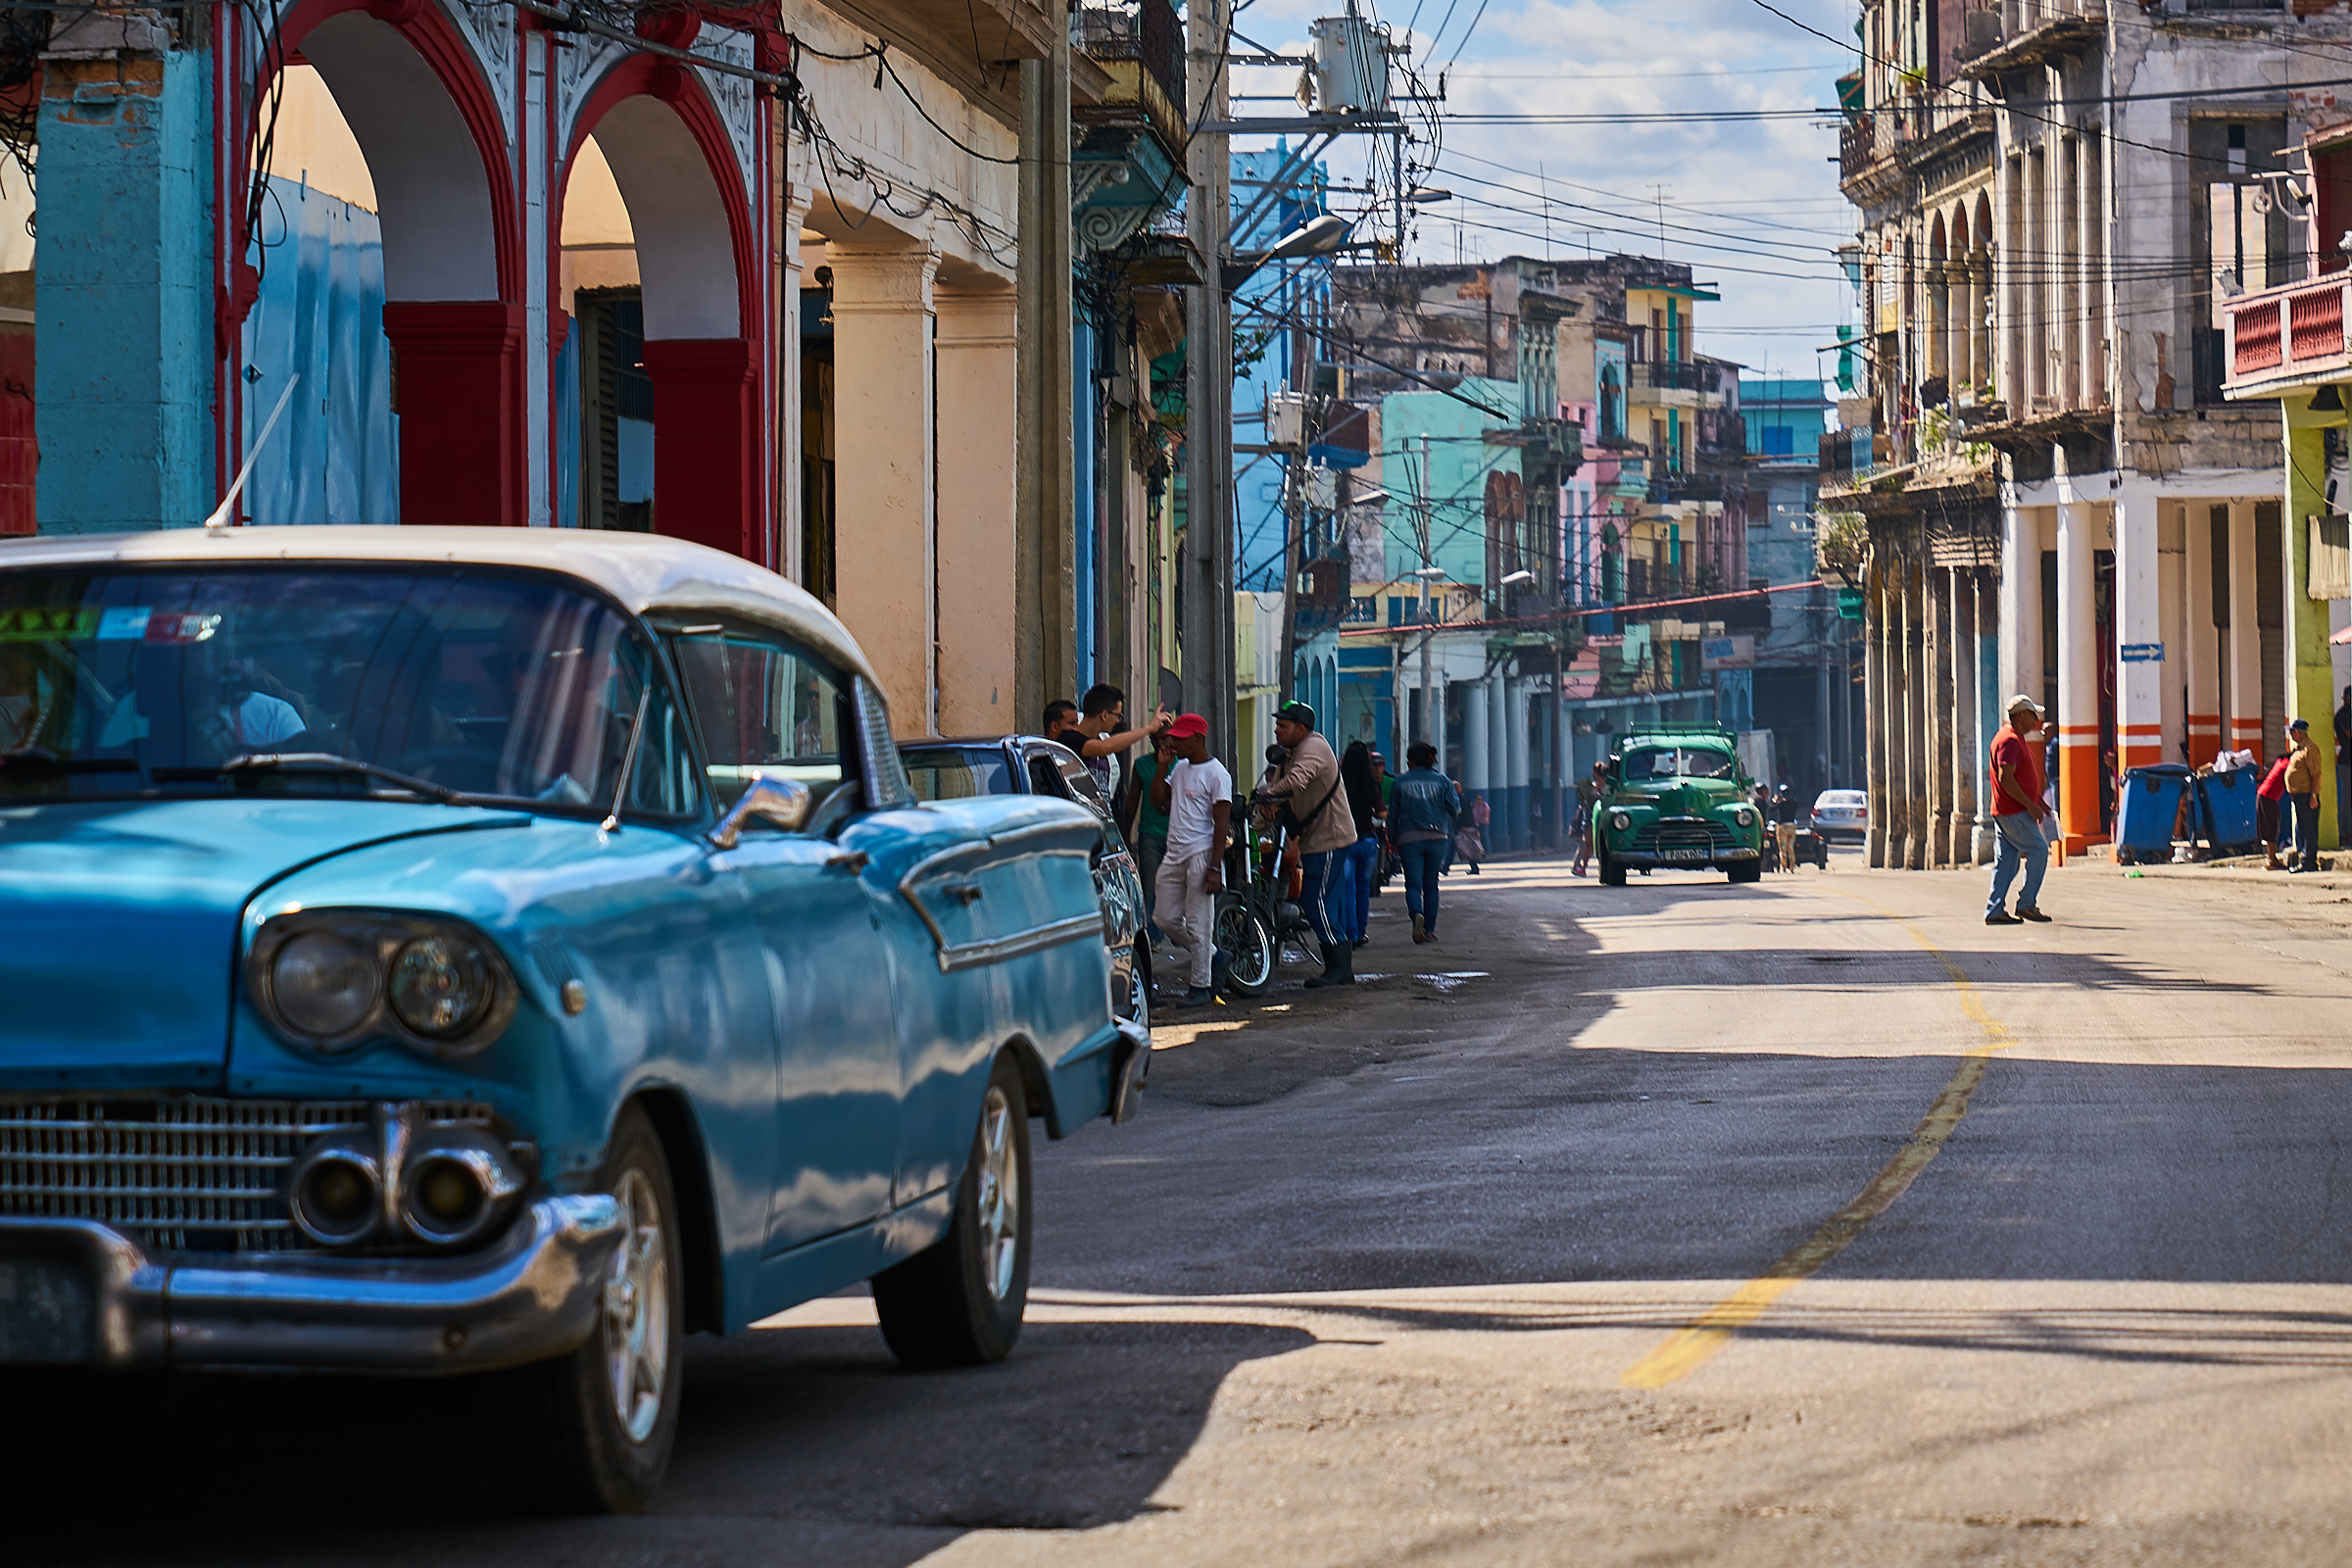 File:Cuba (32075144824).jpg - Wikimedia Commons